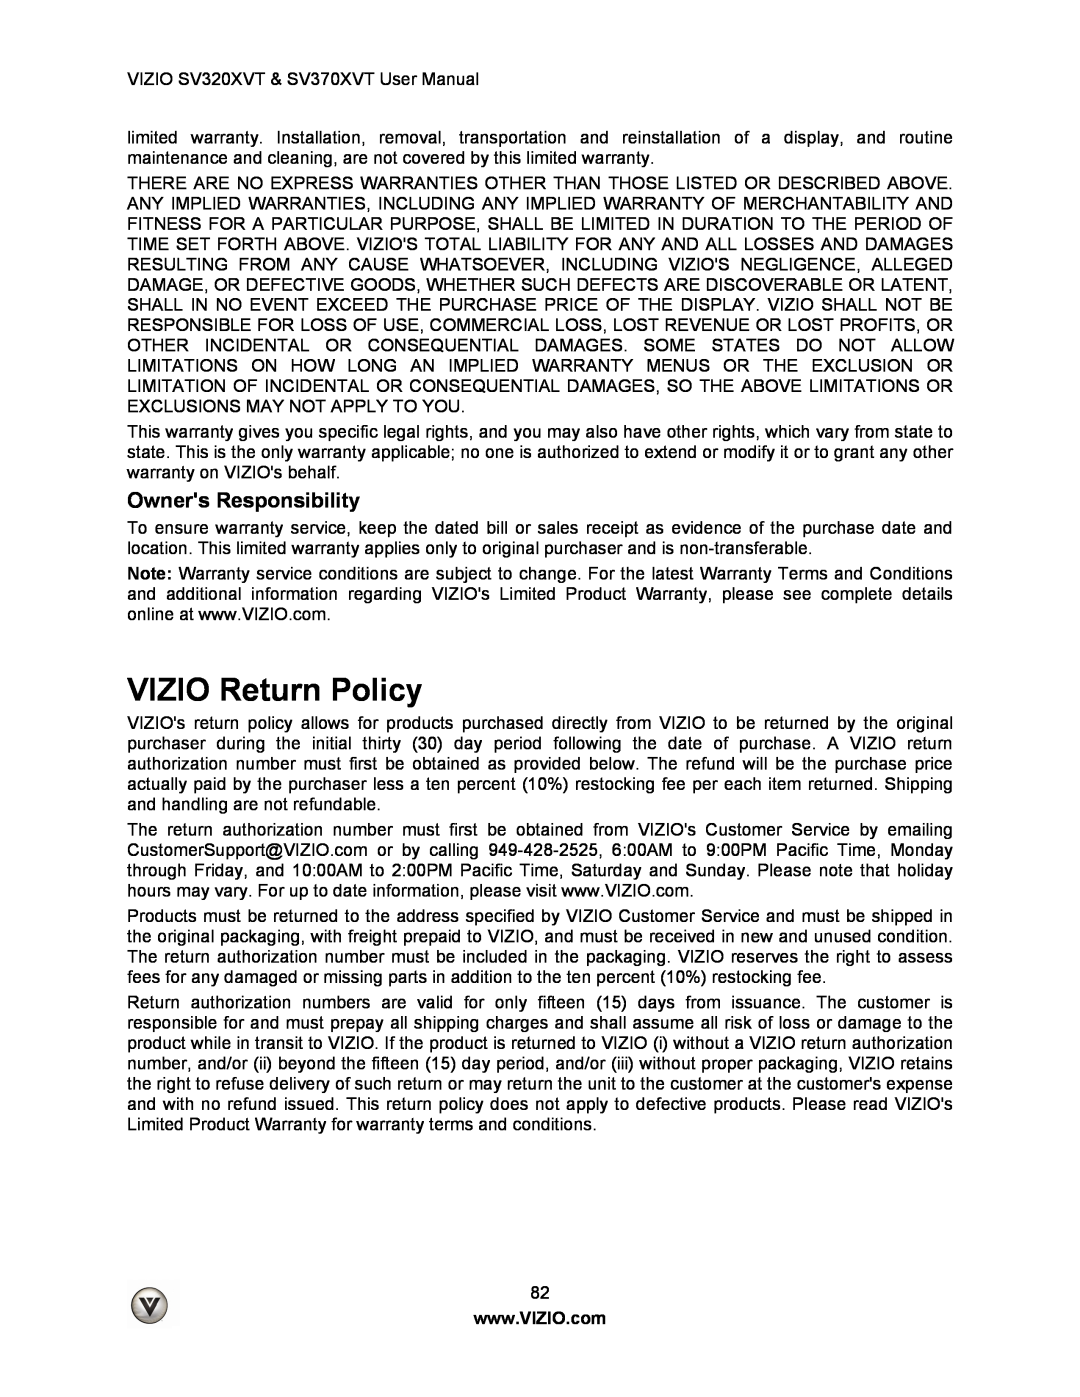 Vizio SV320XVT, SV370XVT user manual Owners Responsibility, VIZIO Return Policy 